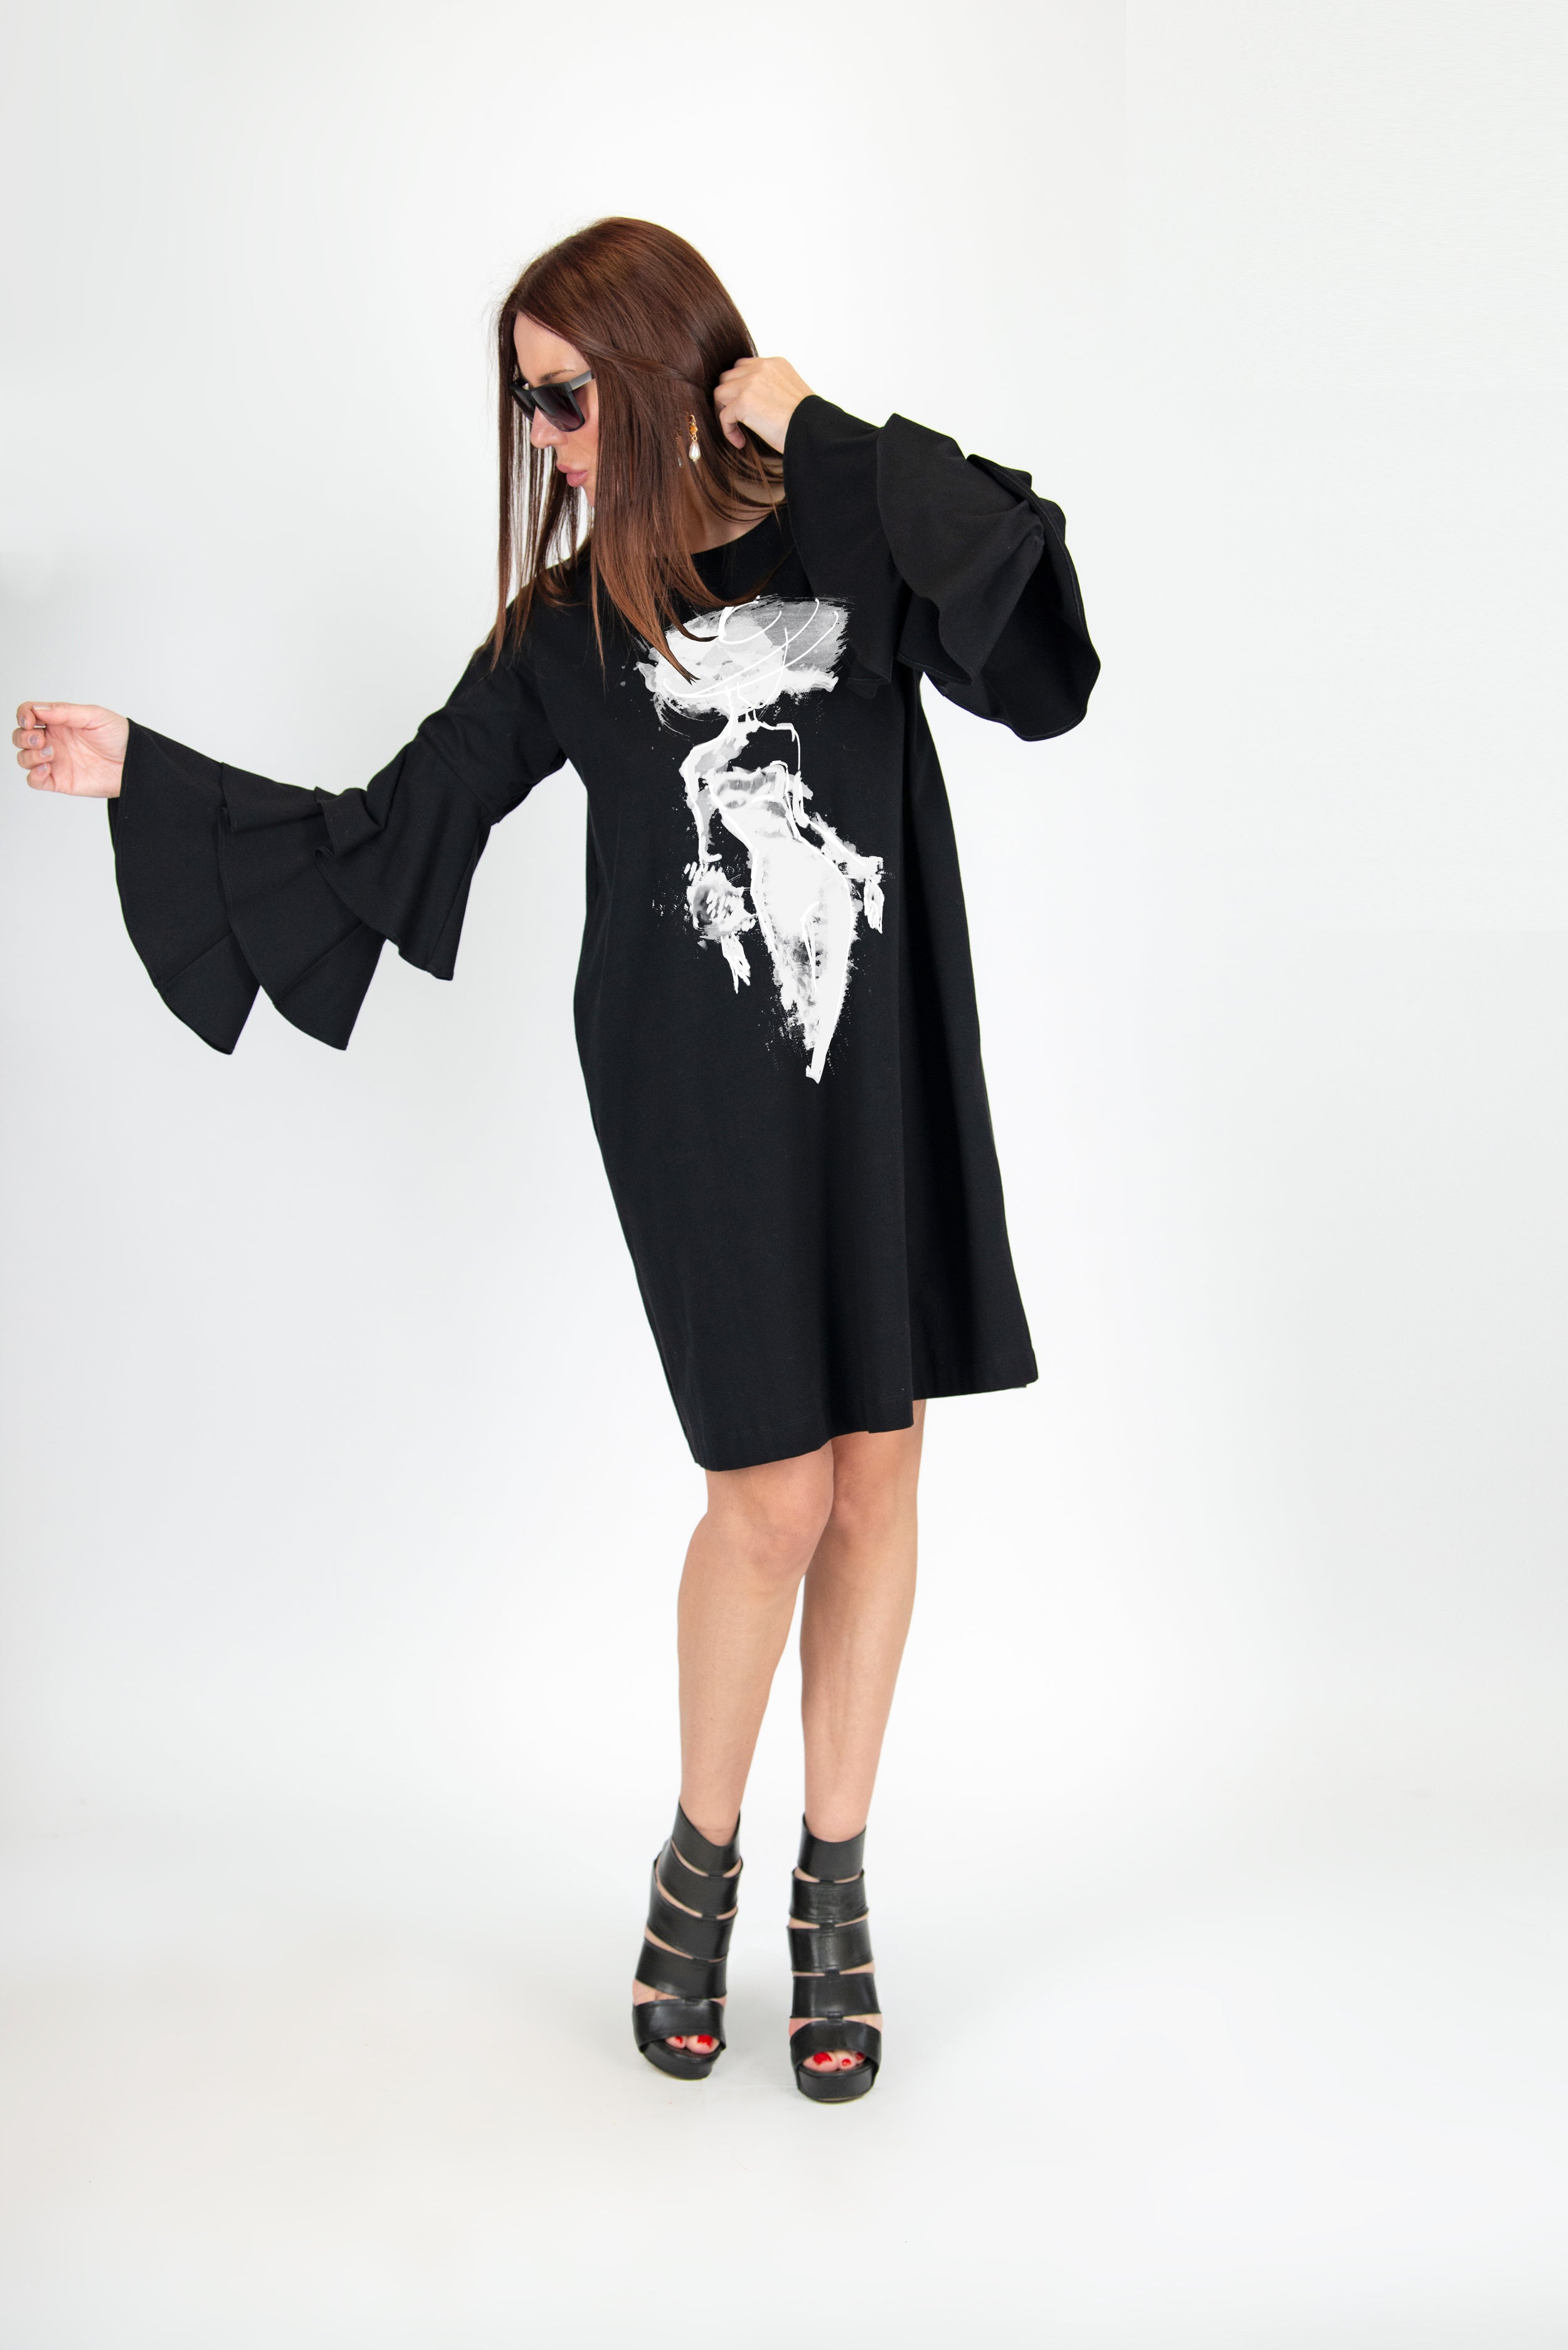 Summer Cotton Print Black Dress by EUG Fashion